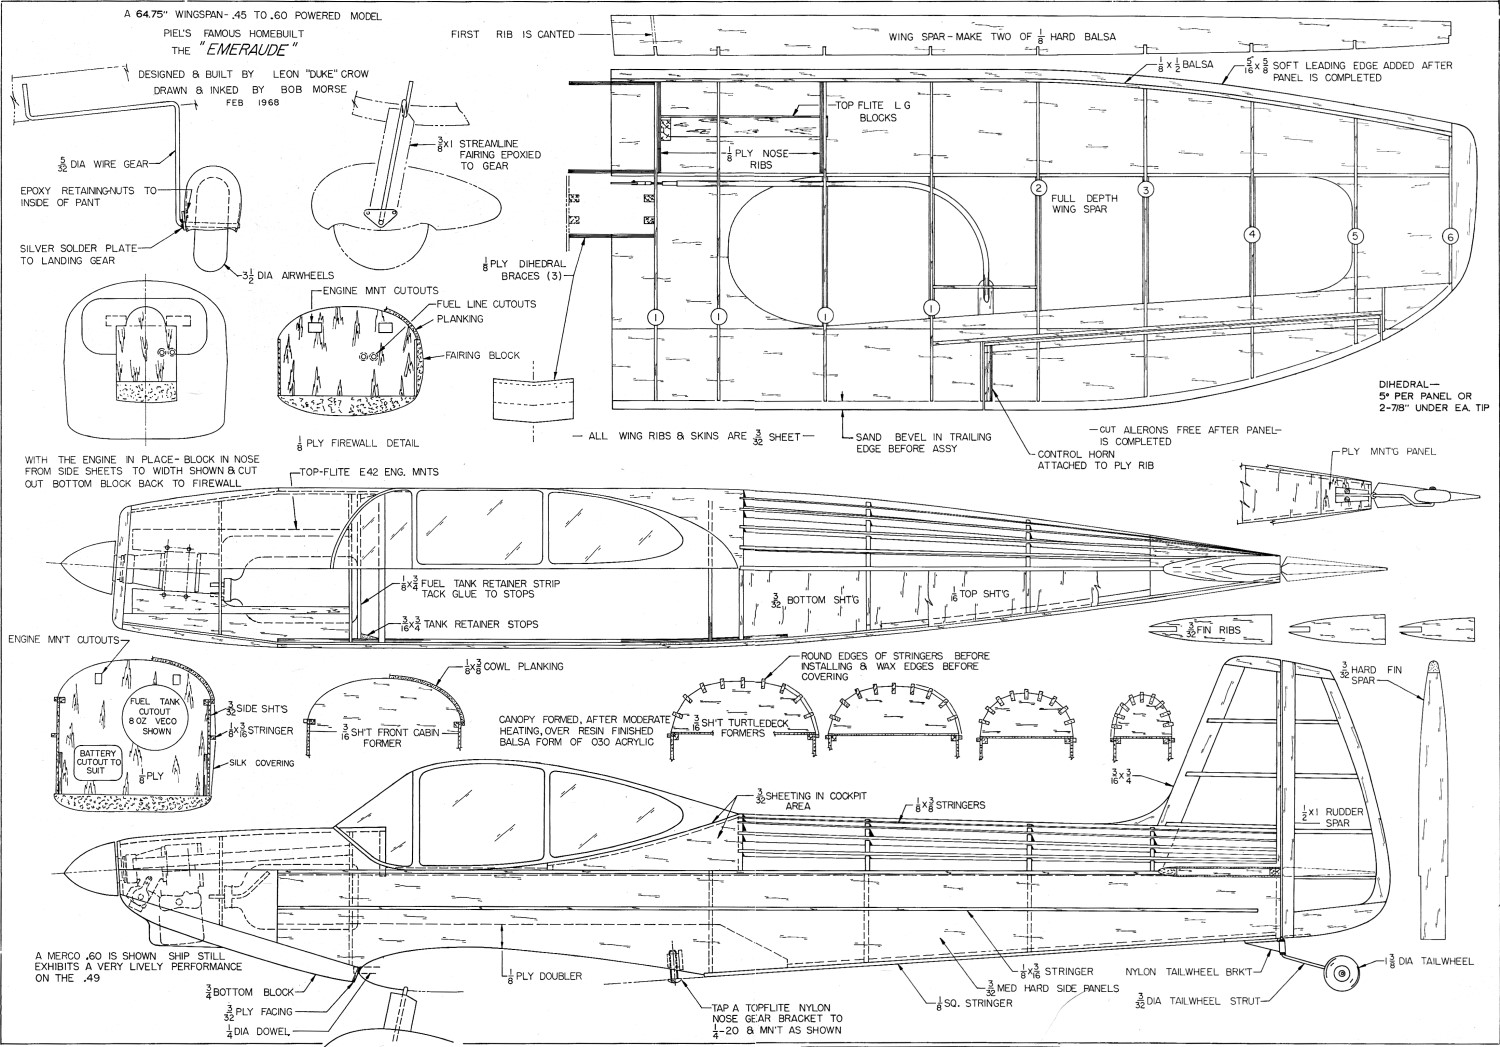 Emeraude Article &amp; Plans, April 1969 American Aircraft 